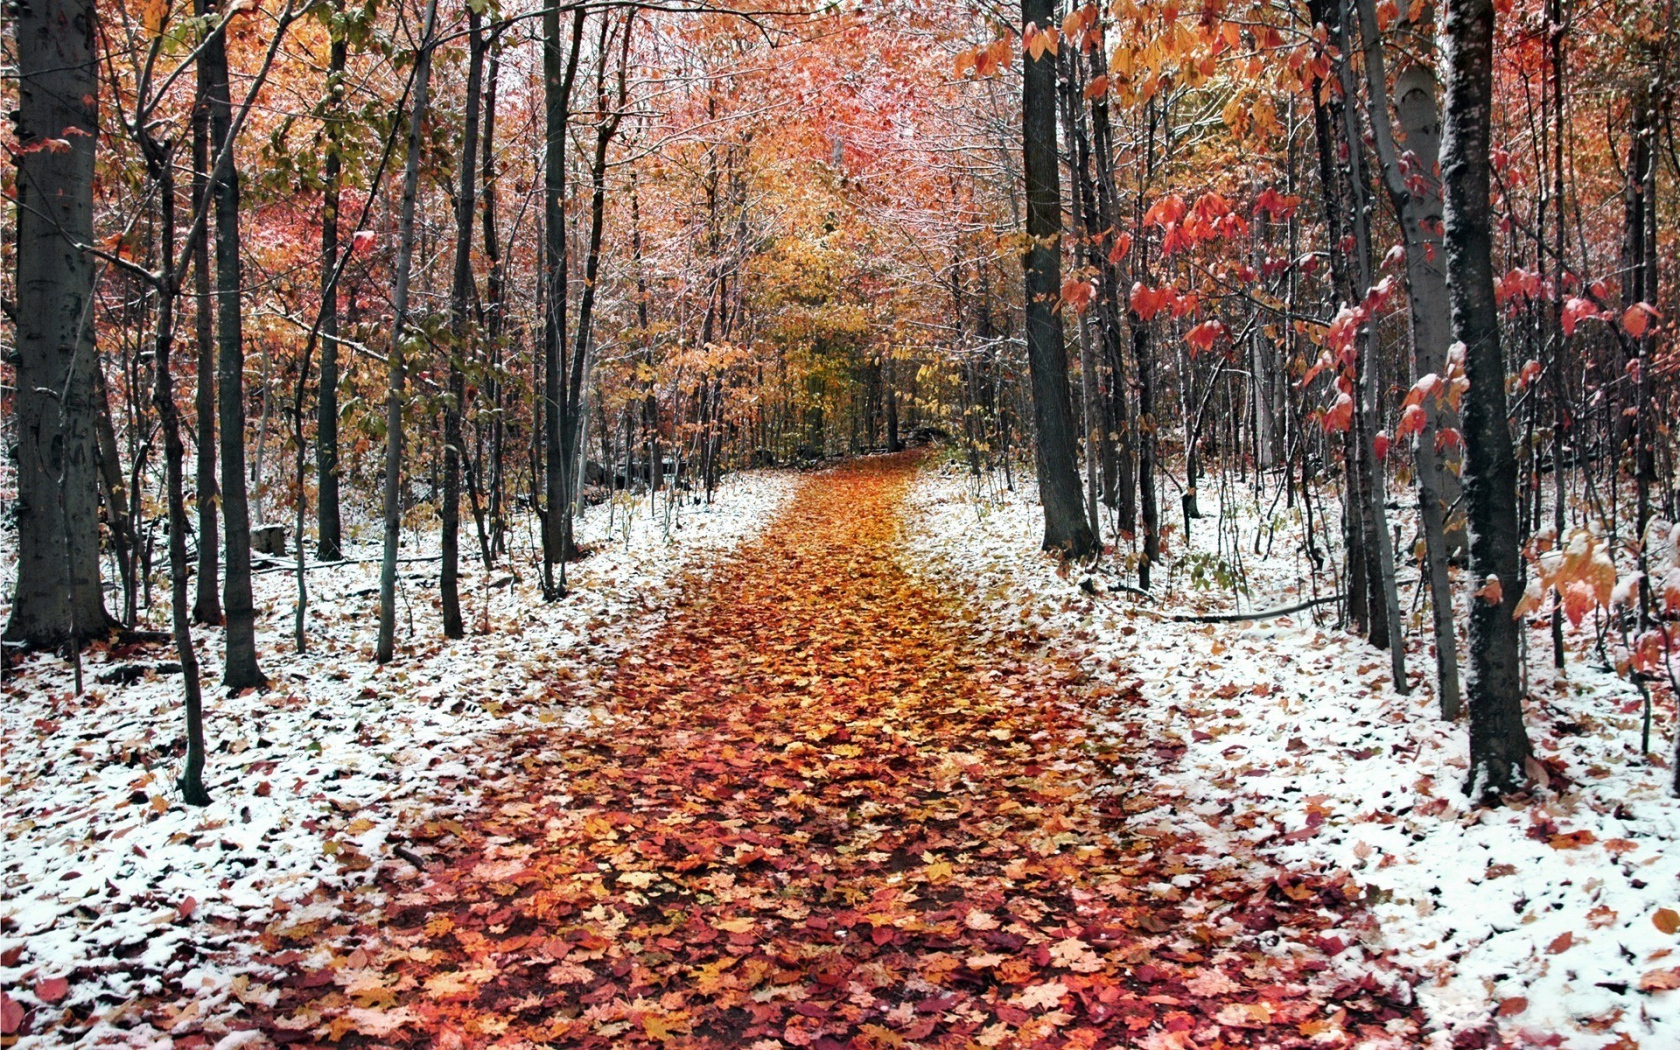 Select Set As Desktop Background Wallpaper Nature Seasons